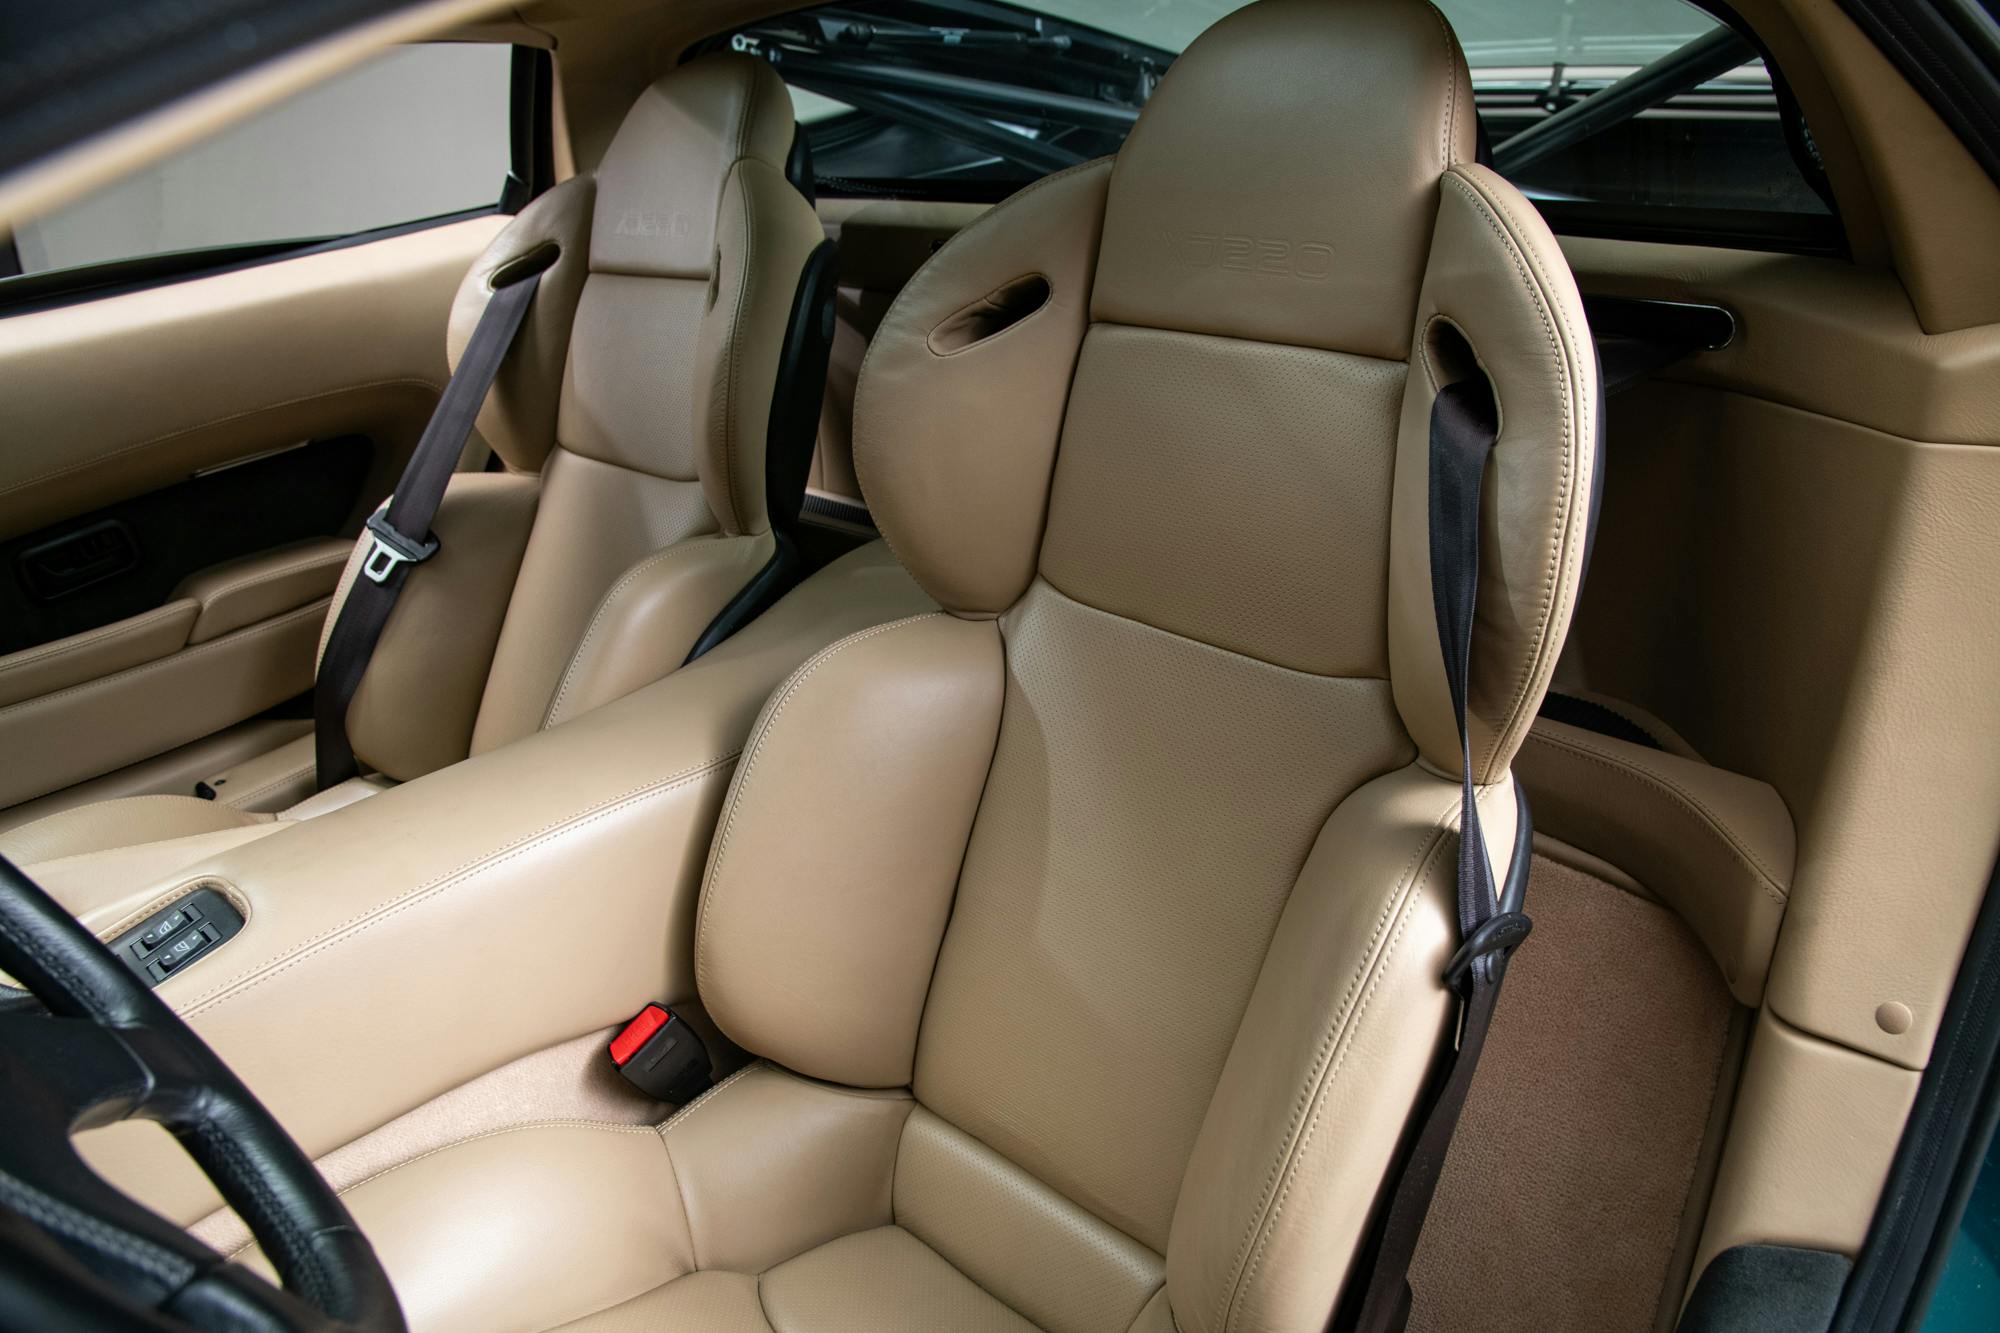 Jaguar XJ220 interior seat